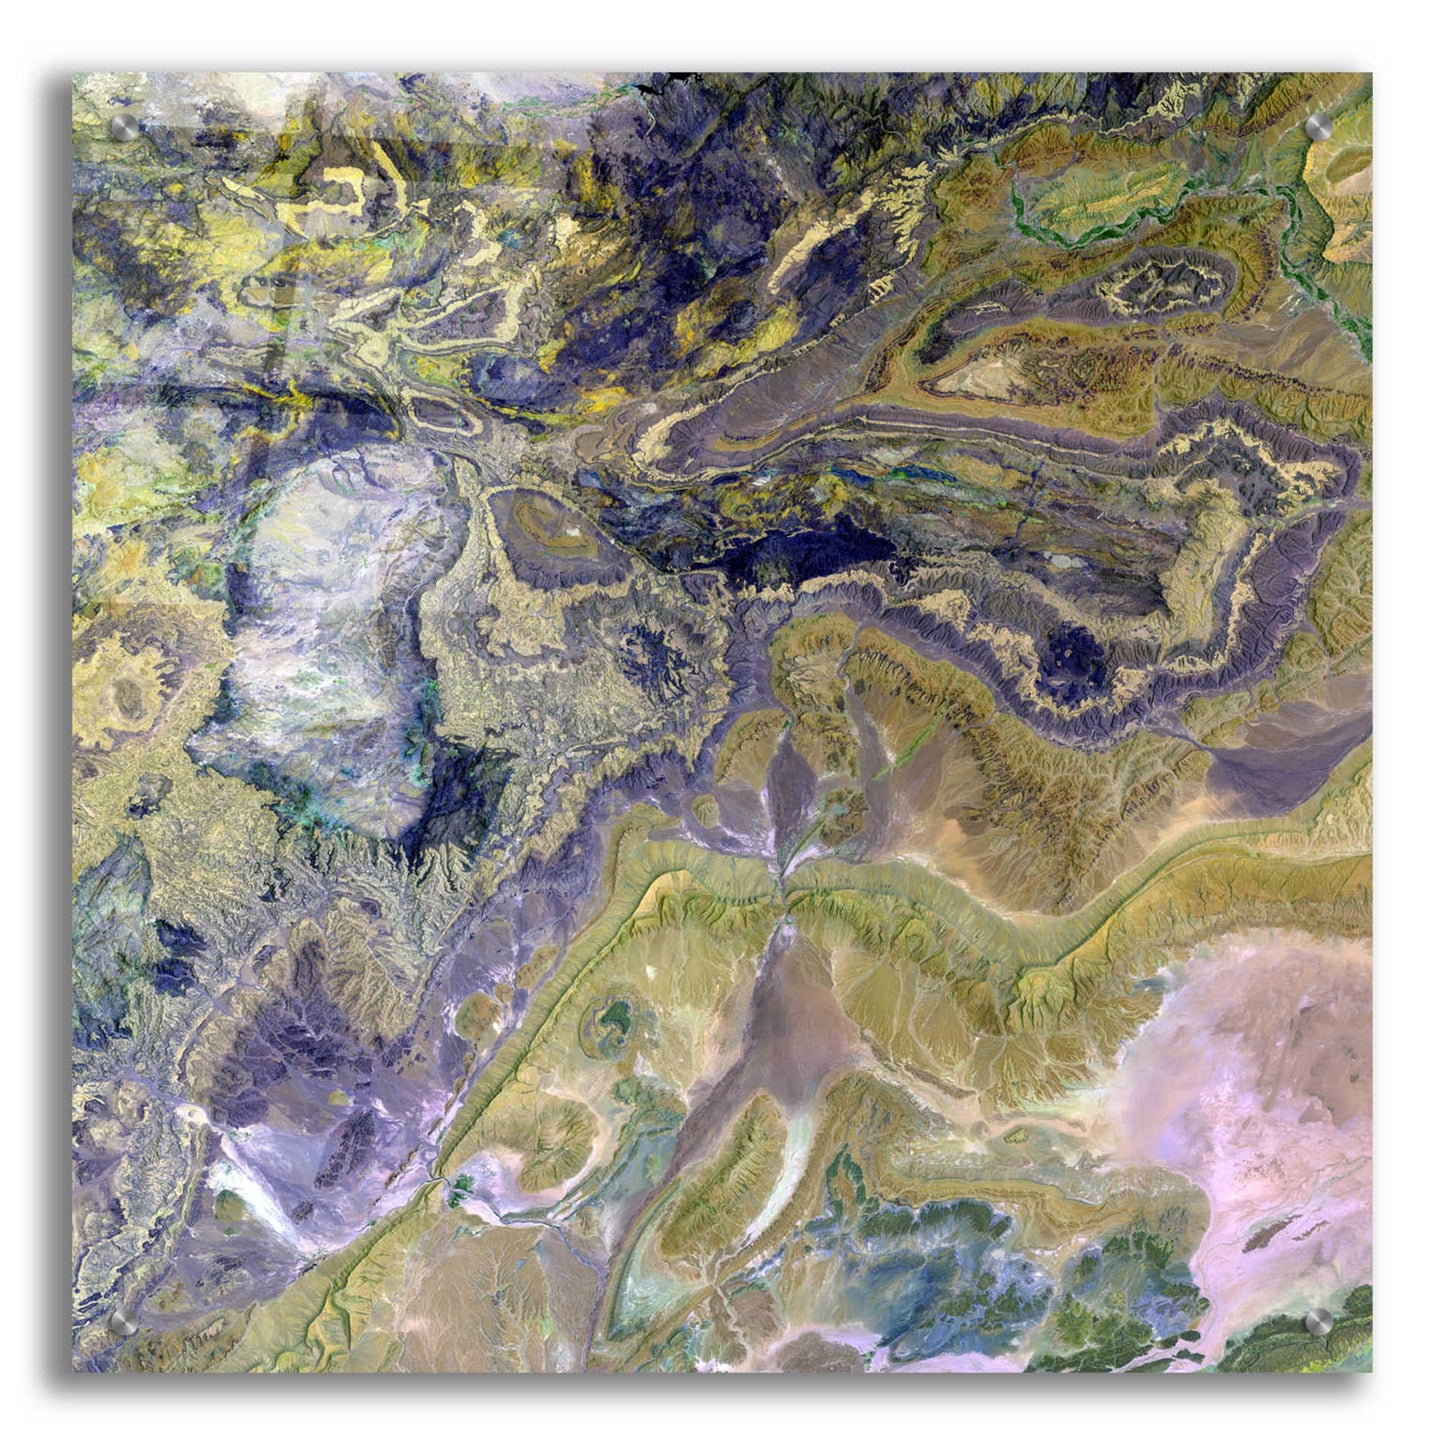 Epic Art 'Earth as Art: Atlas Mountains' Acrylic Glass Wall Art,24x24